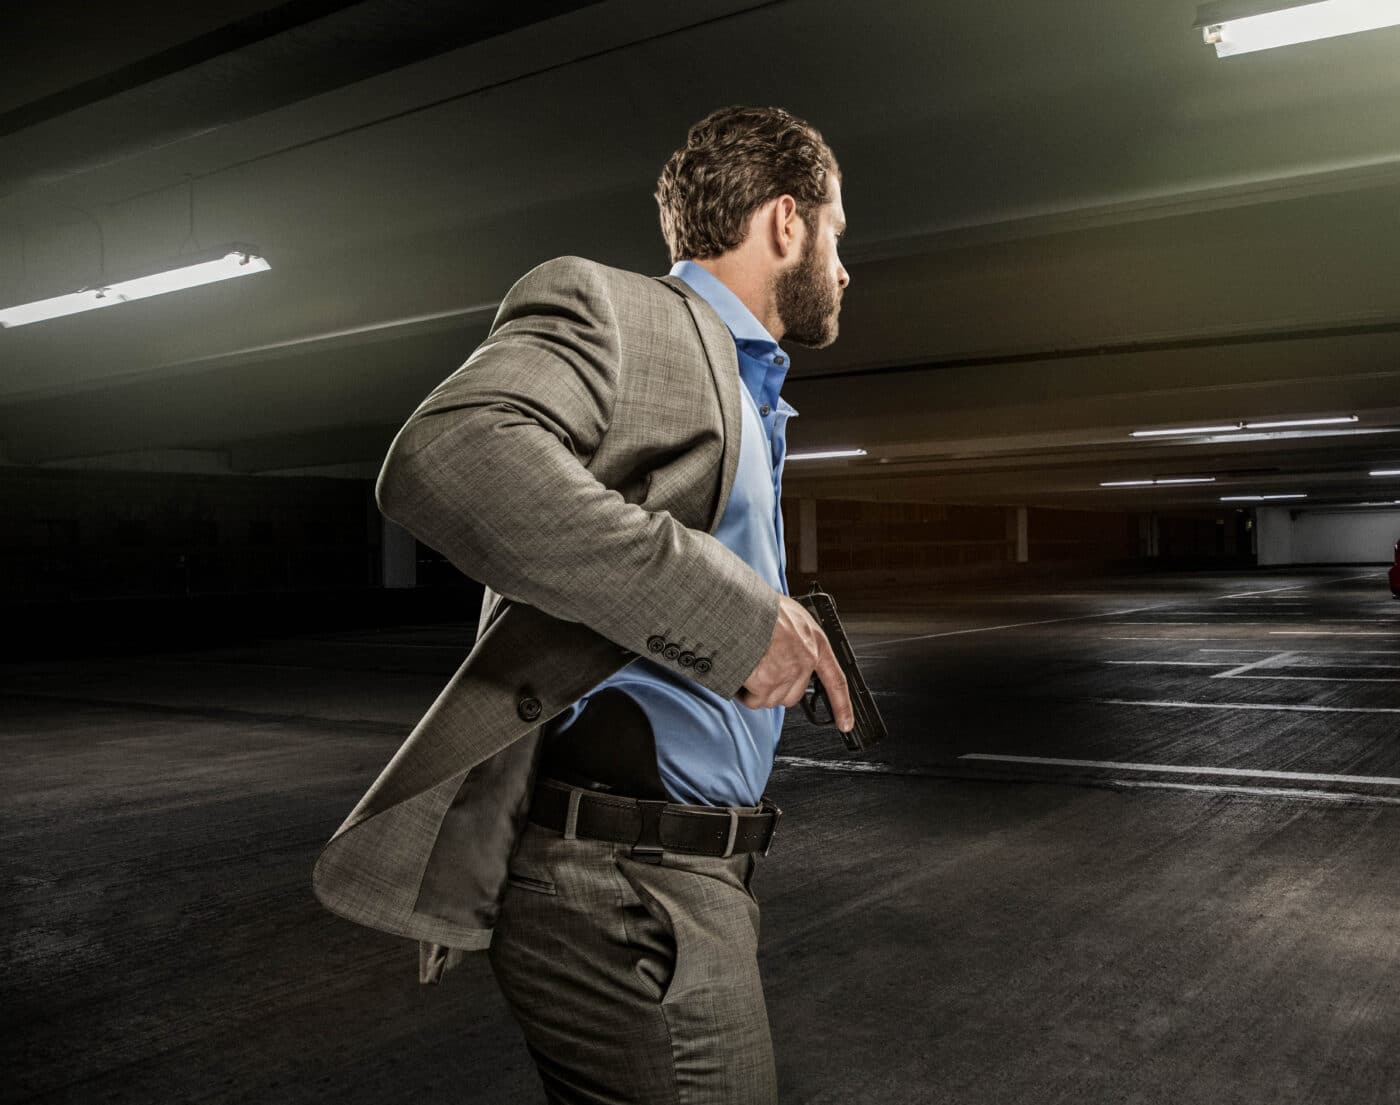 Man drawing pistol in self defense in a parking garage